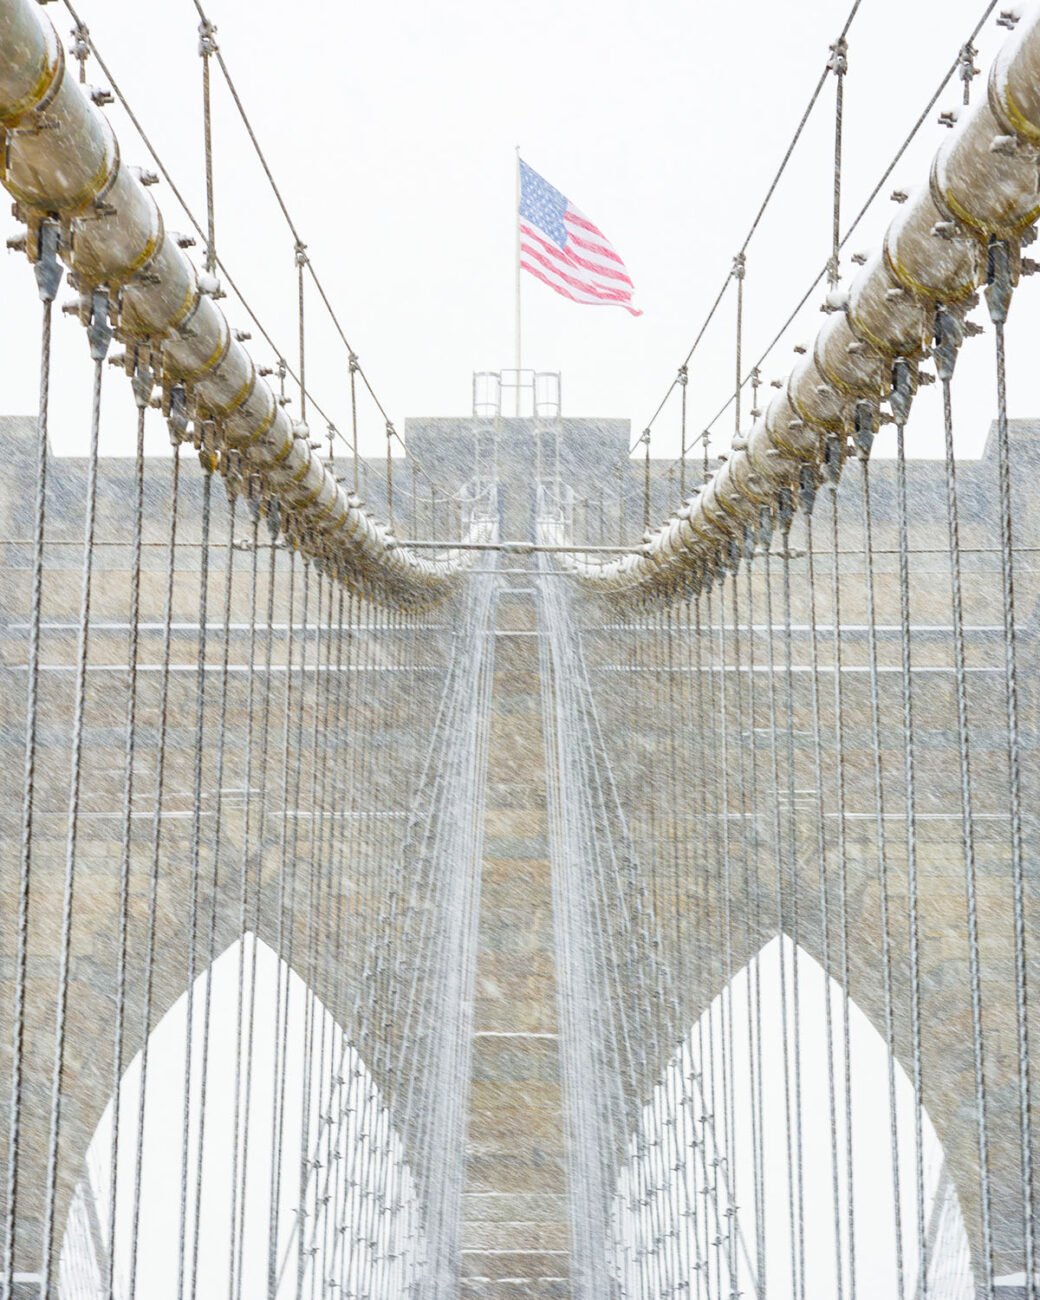 Brooklyn Bridge and flag in snowstorm